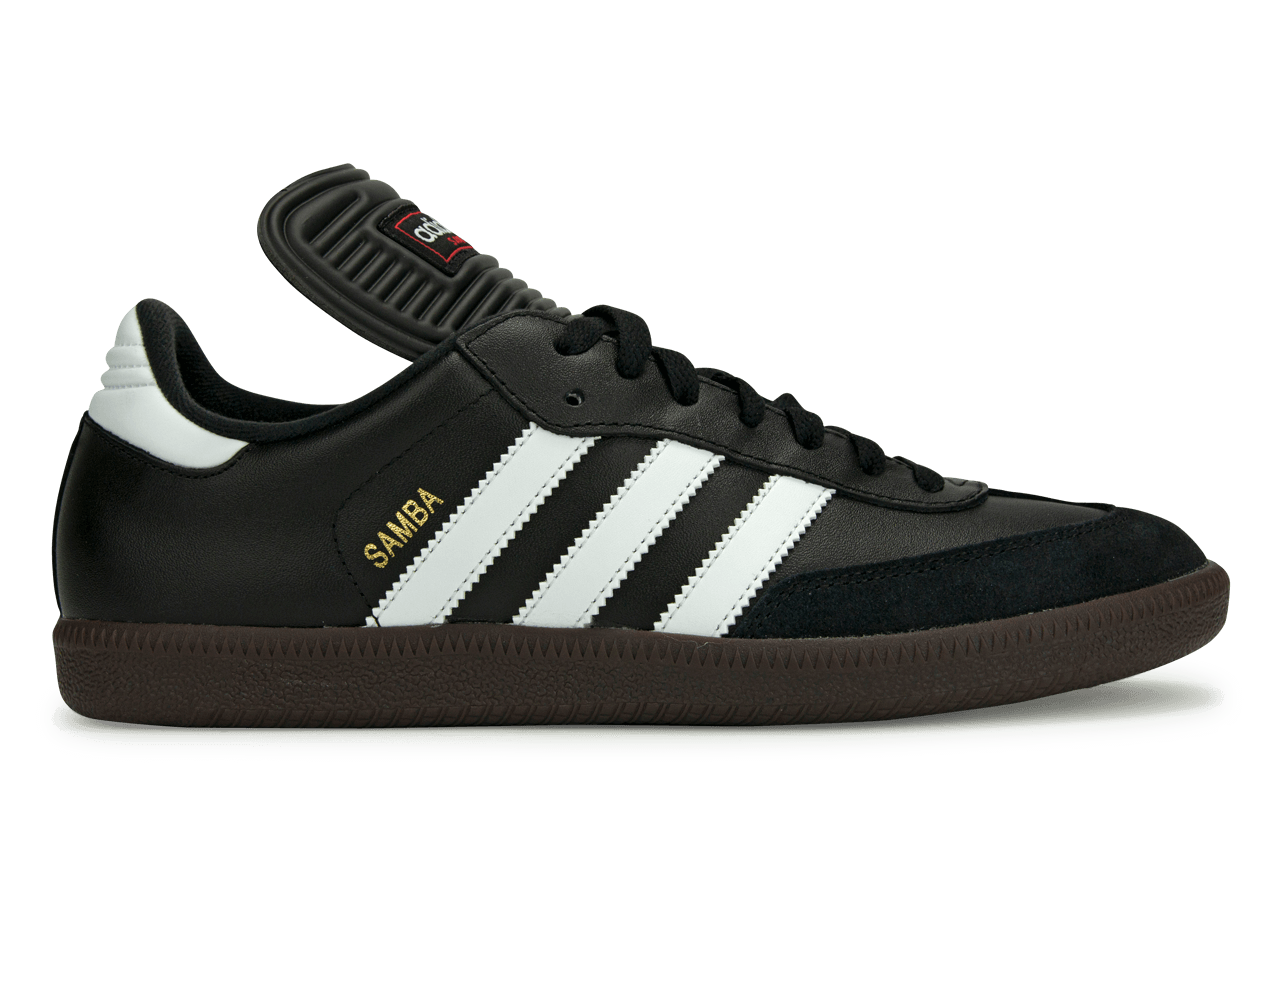 adidas Samba Classic Indoor Soccer Shoes Black/White